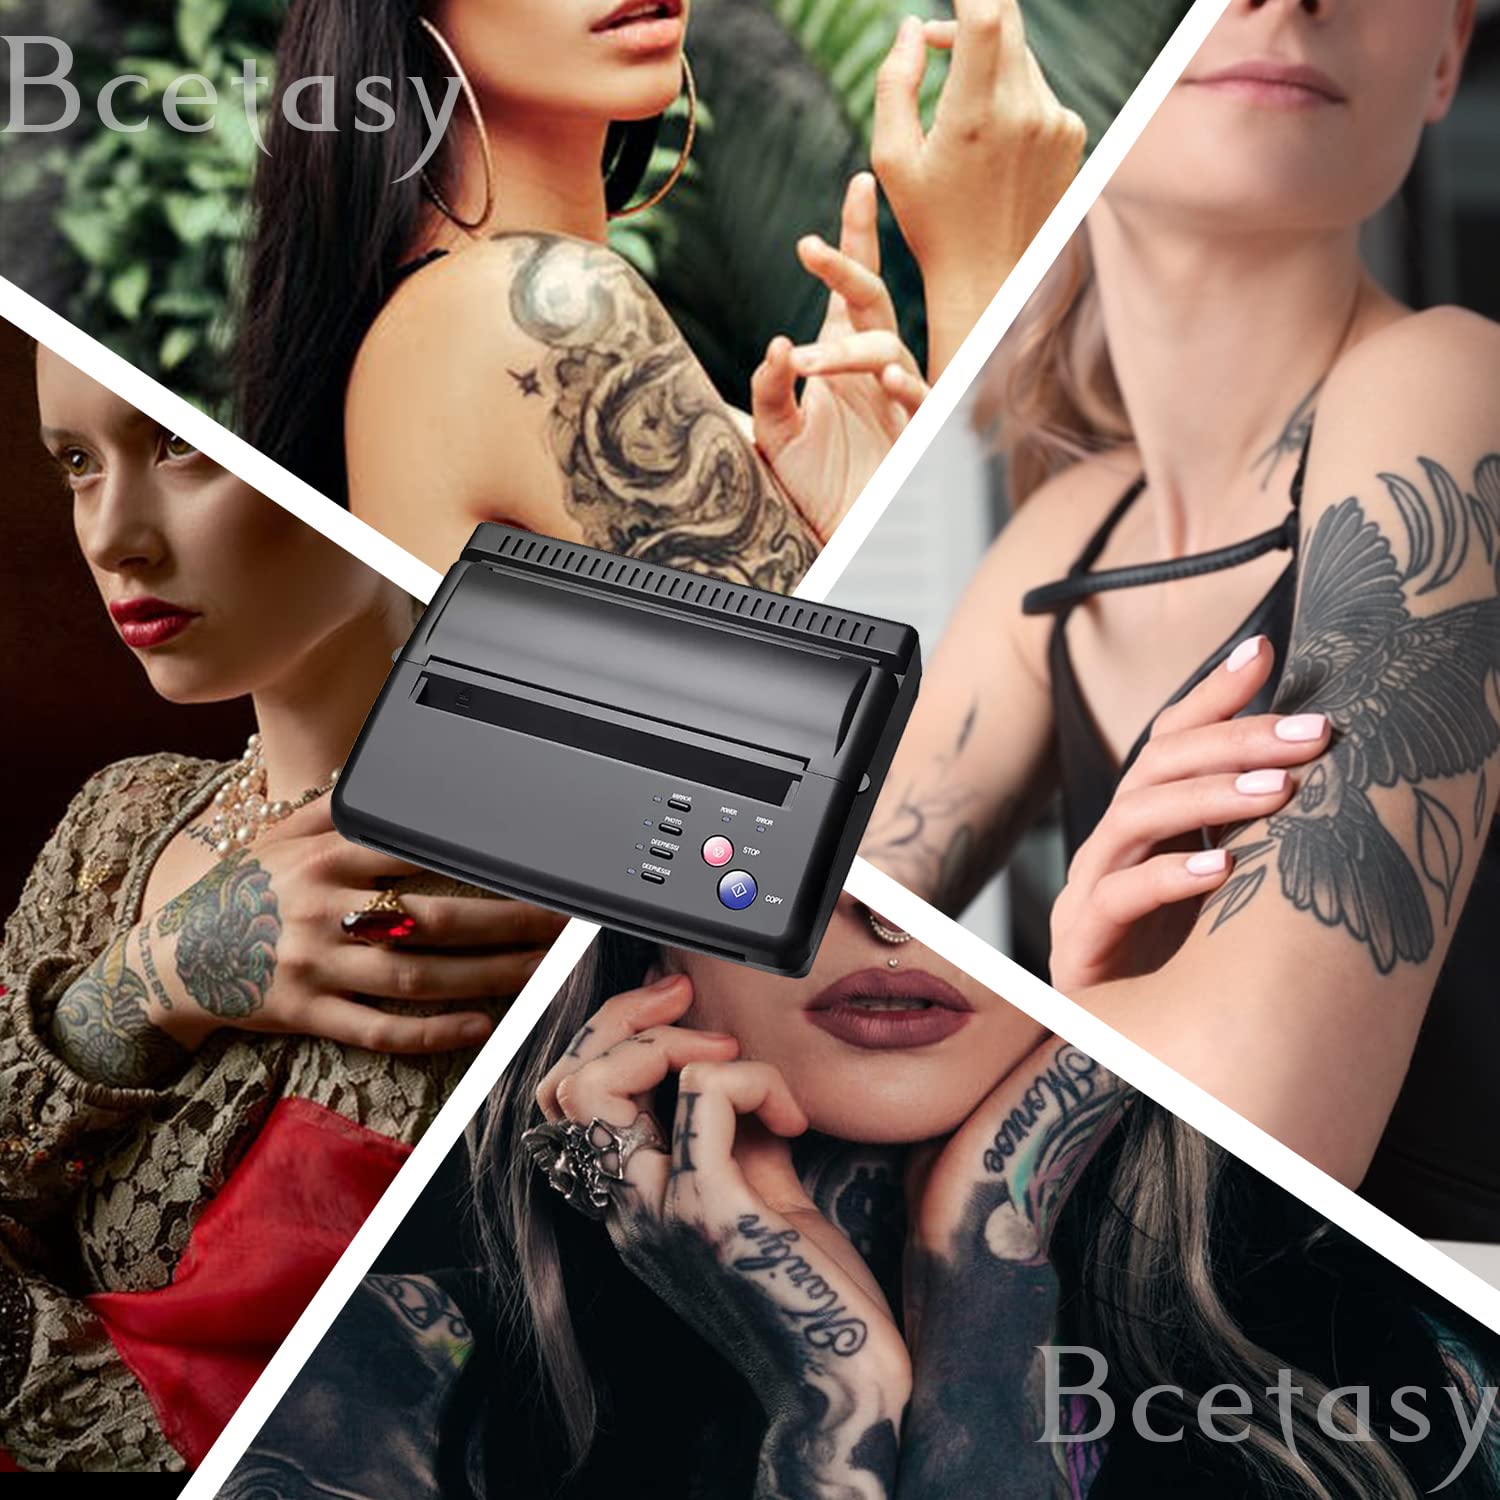 Bcetasy Tattoo Transfer Stencil Printer, with Free 20PCS Transfer Paper, Thermal Copier Machine for Tattoo Transfer Temporary and Permanent Tattoos,Black